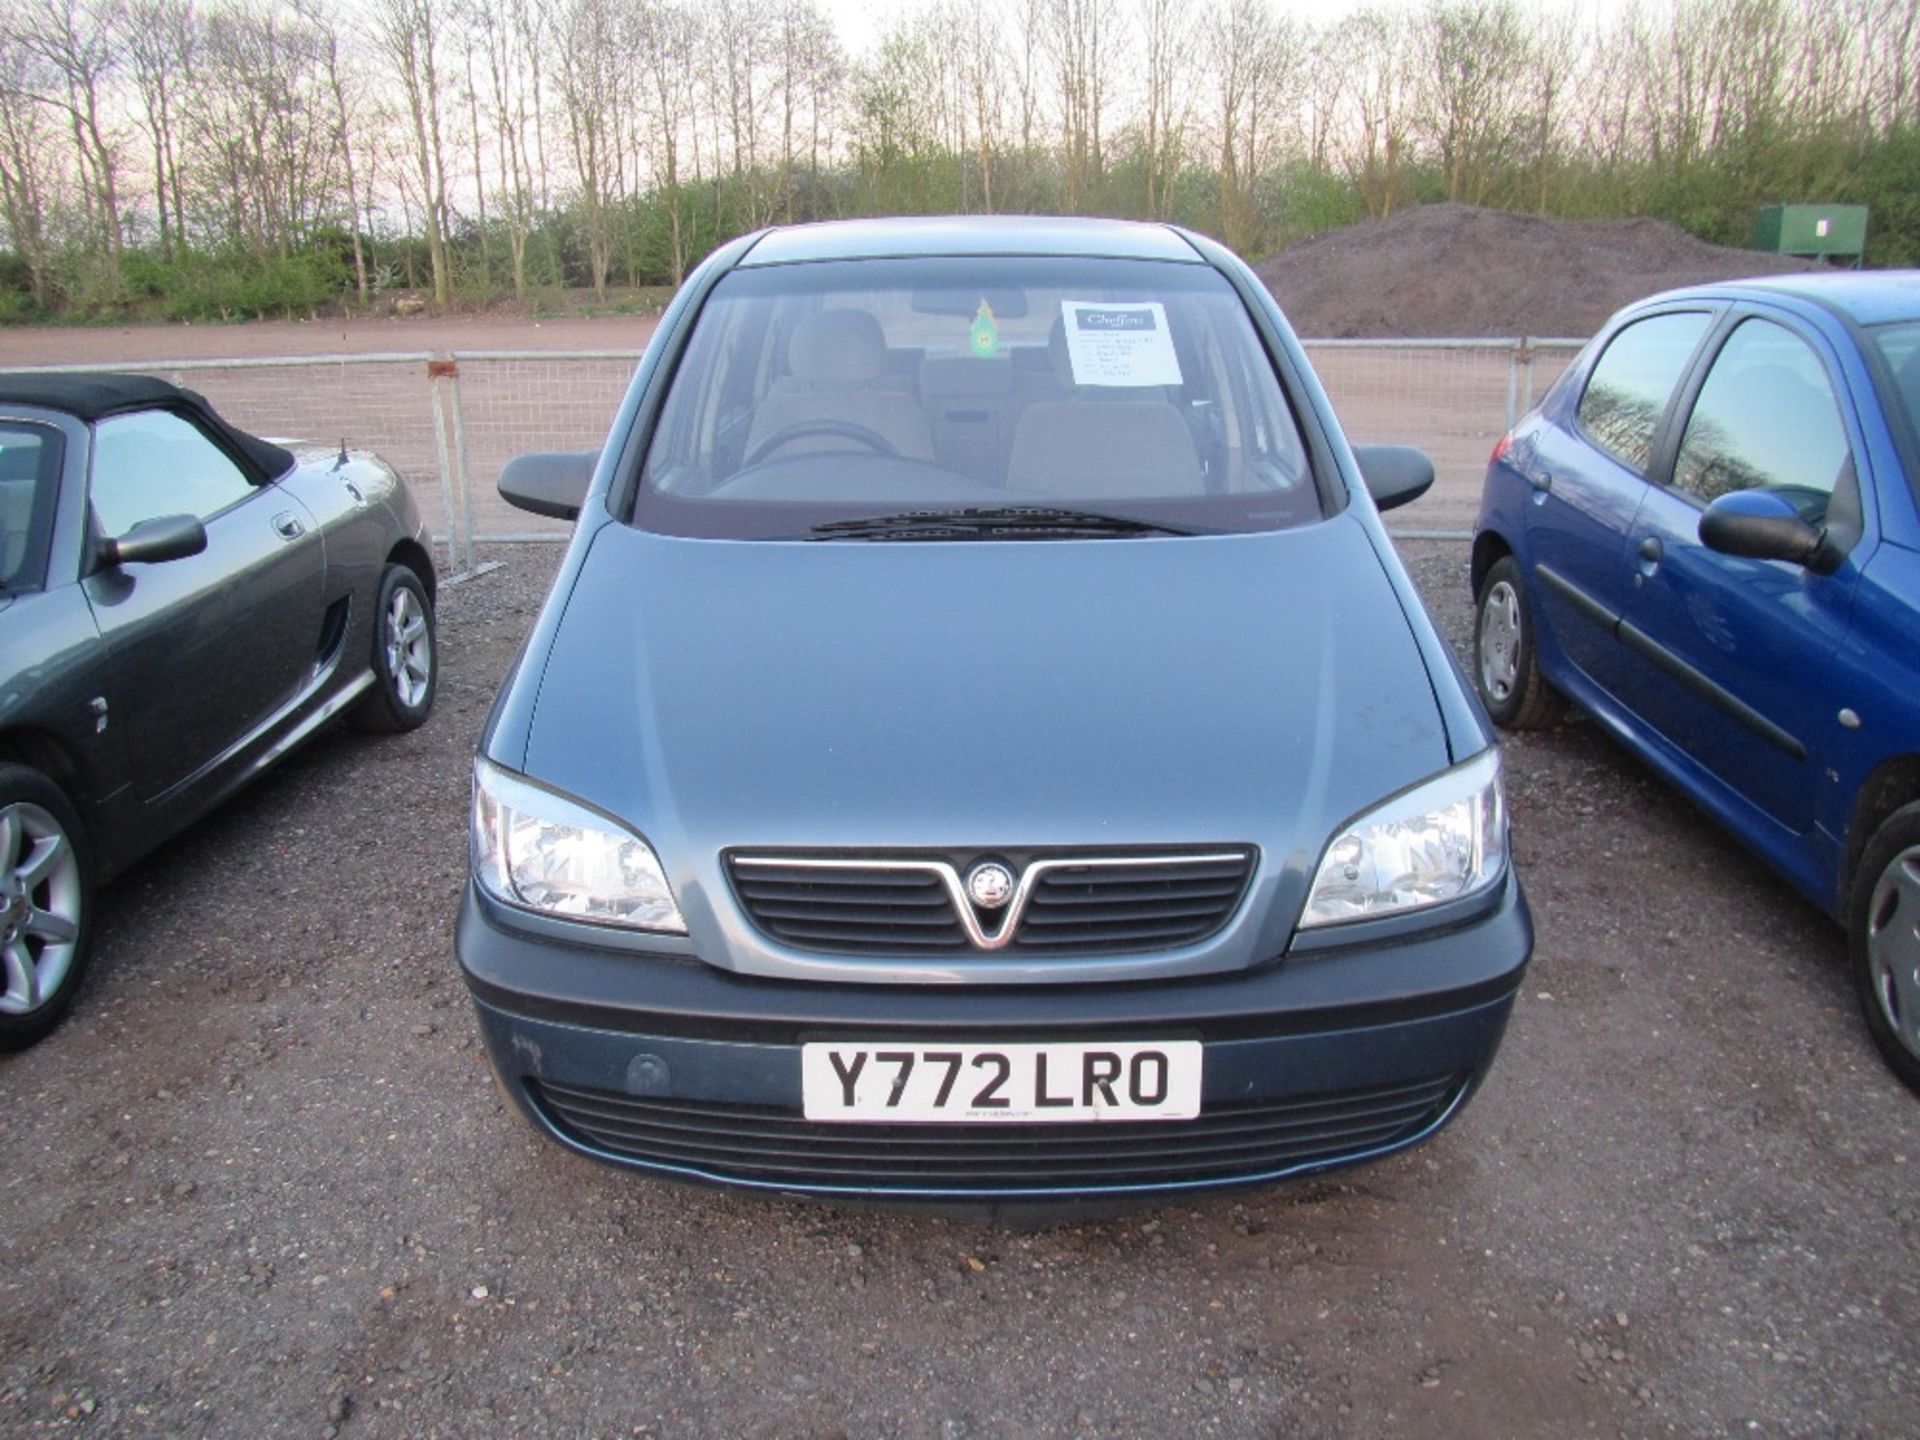 Vauxhall Zafira. Mileage: 114,335. MOT till 21/6/17. Reg. No. Y772 LRO - Image 2 of 5